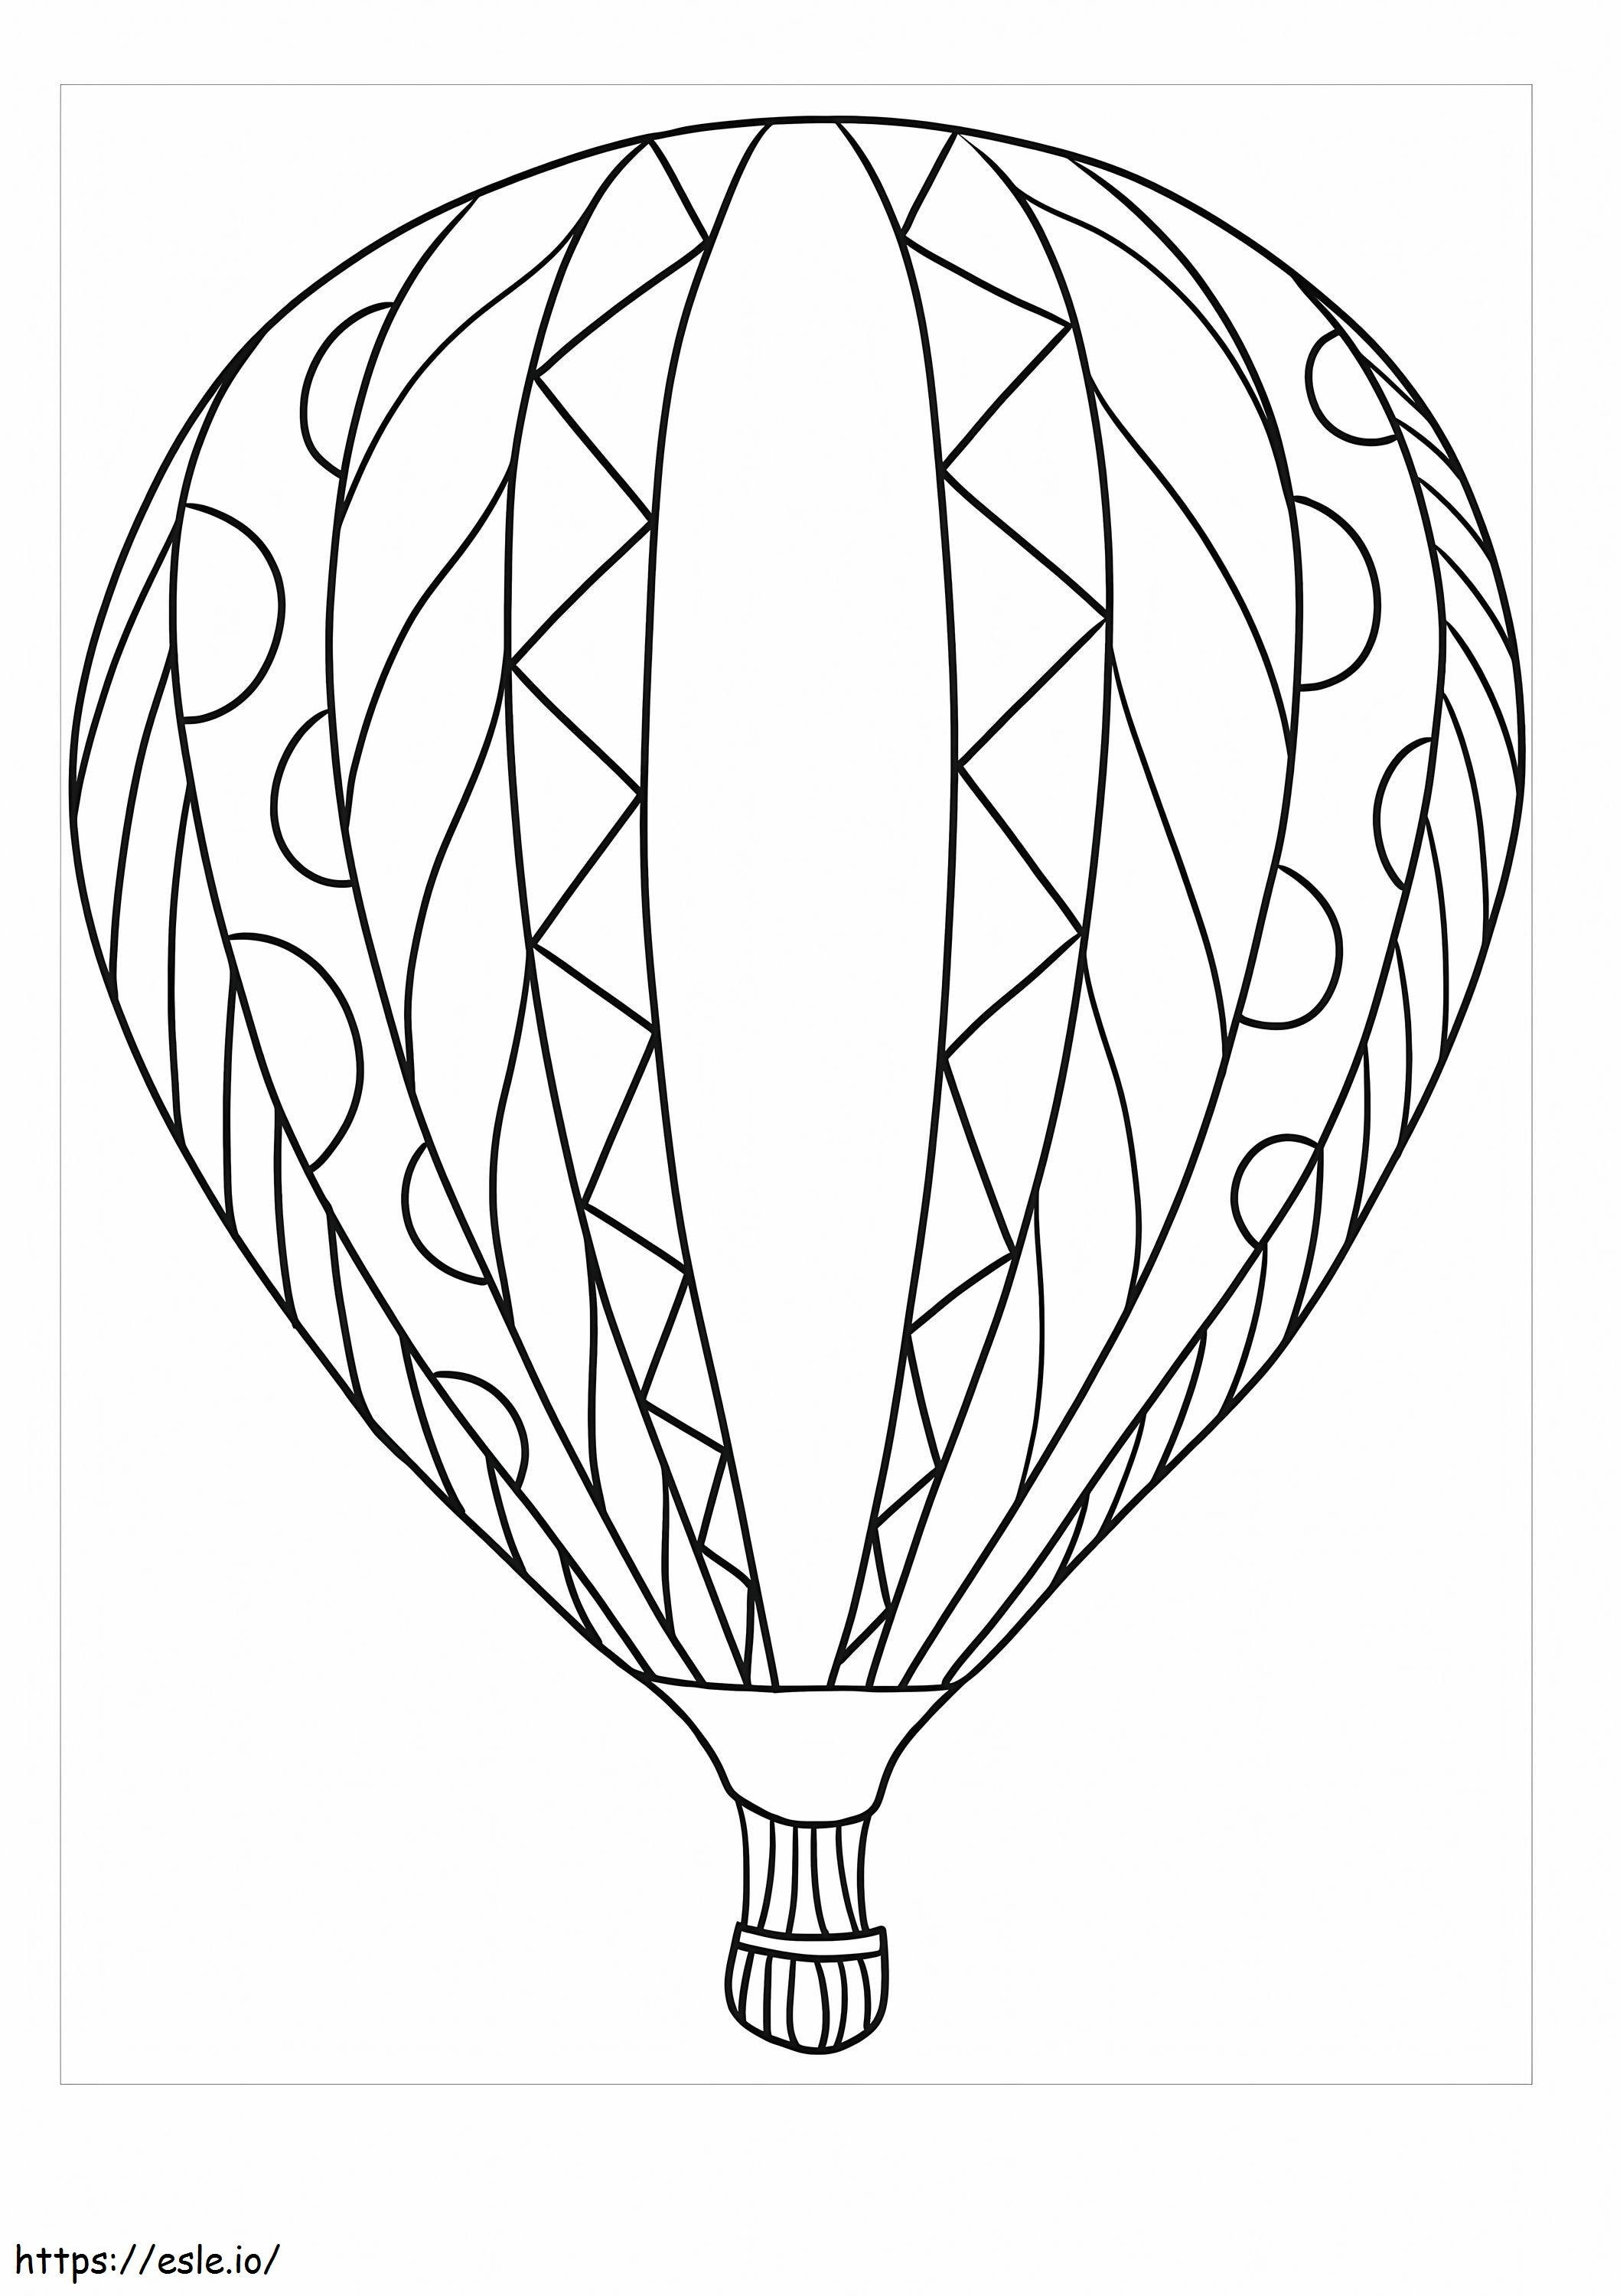 Balão de ar quente adulto para colorir